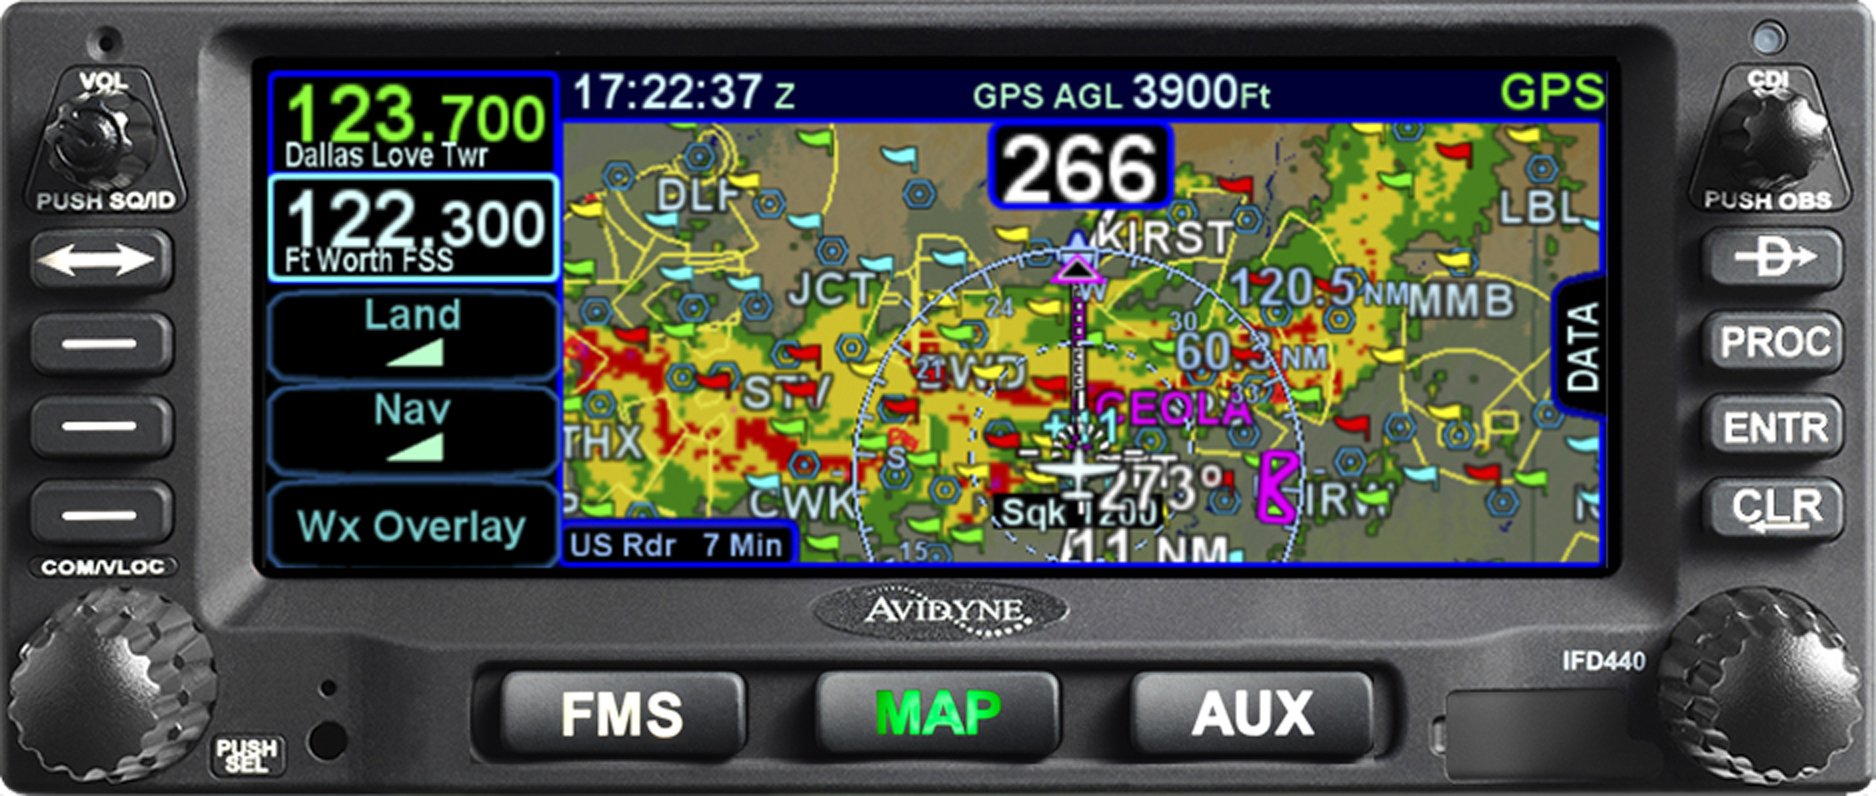 IFD440 Touch Screen FMS/GPS/NAV/COM - Pacific Coast Avionics